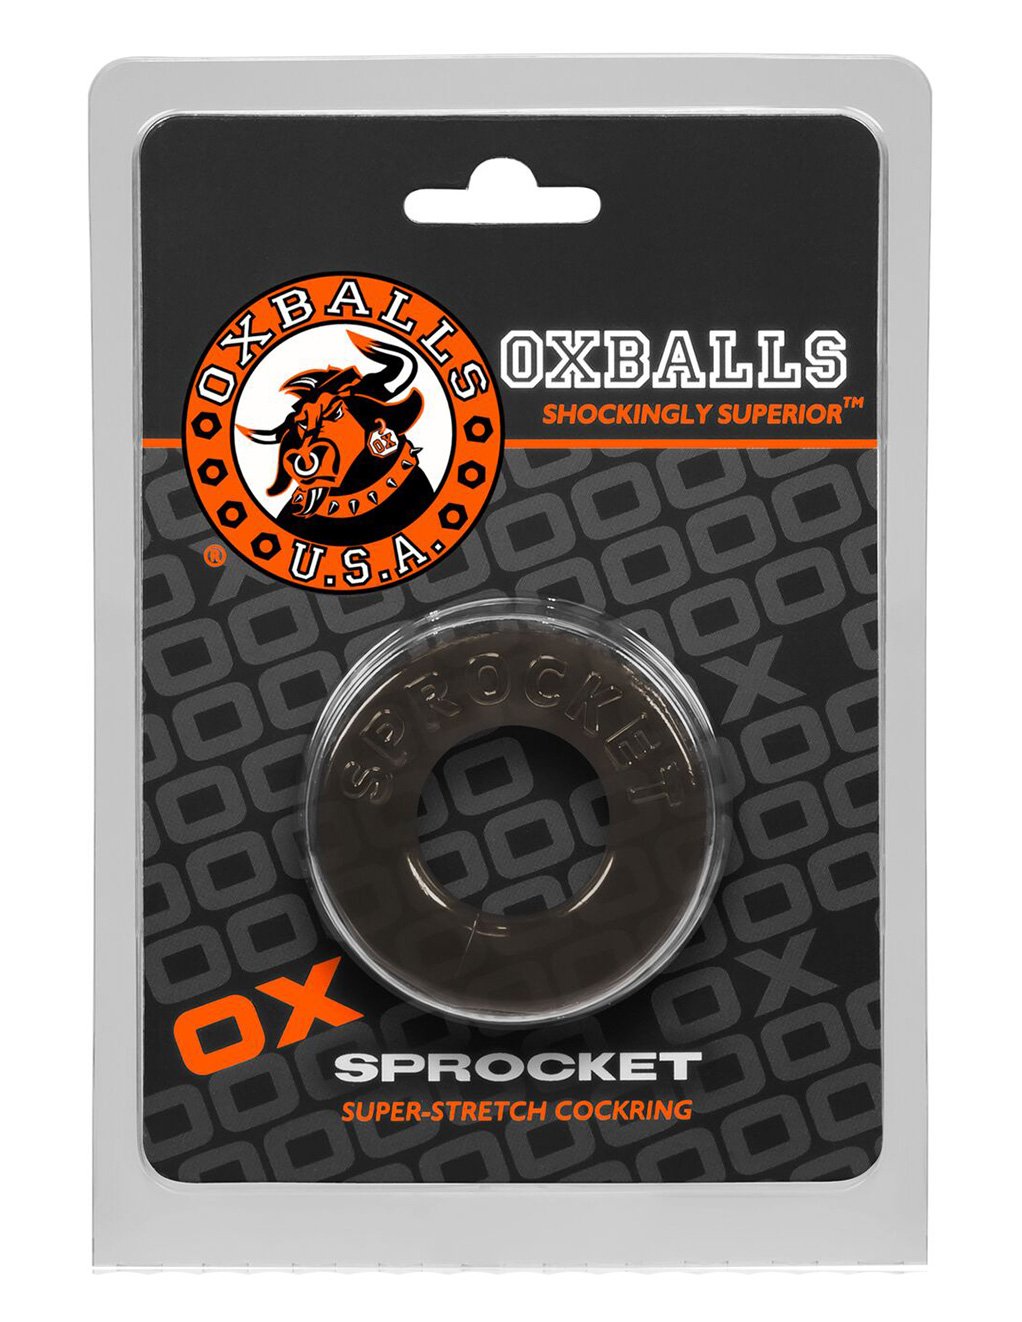 Oxballs Sprocket Cockring- Smoke- Package